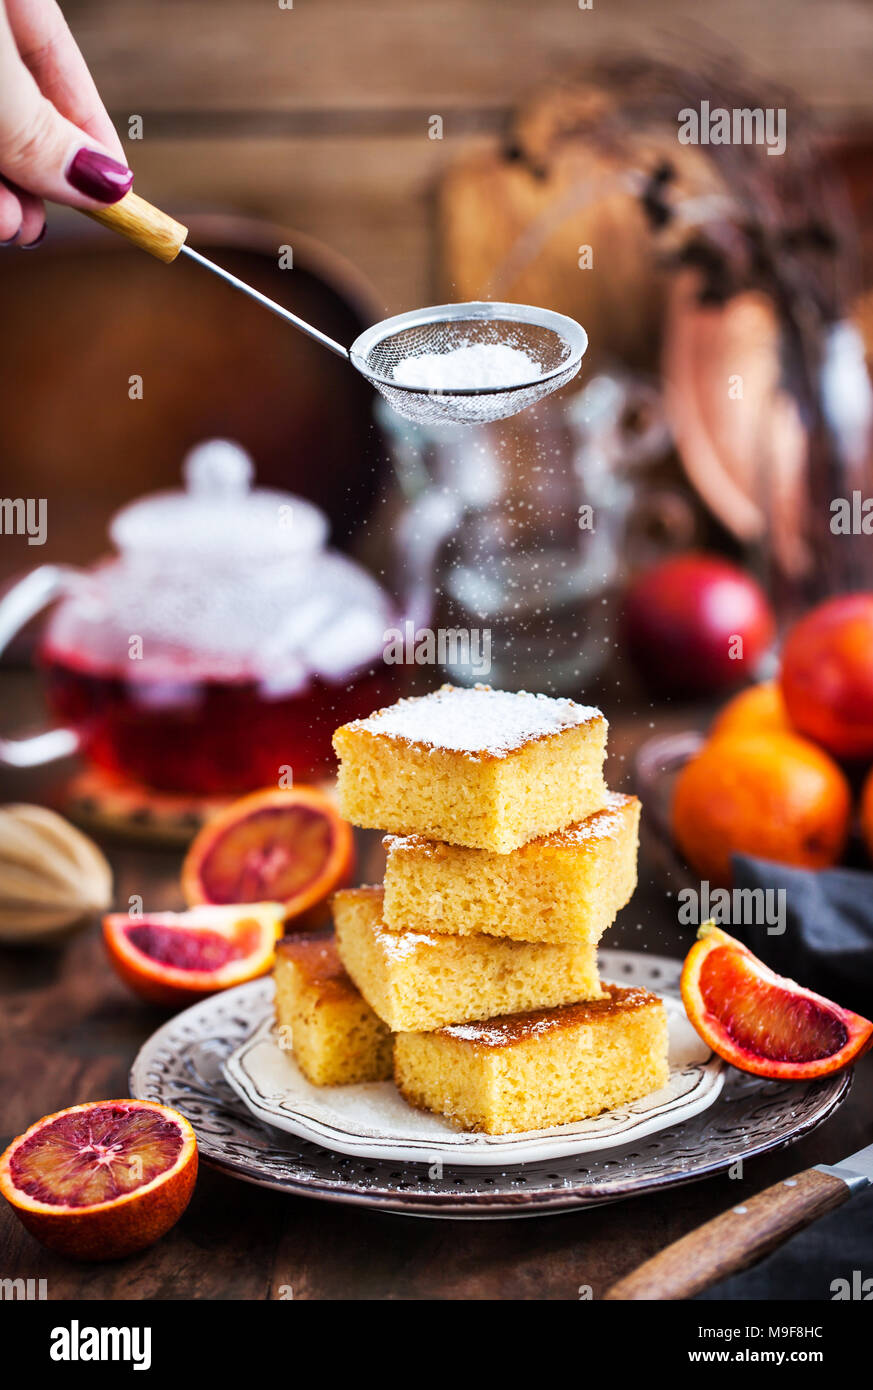 Homemade gluten-free polenta, almond and blood orange cake Stock Photo